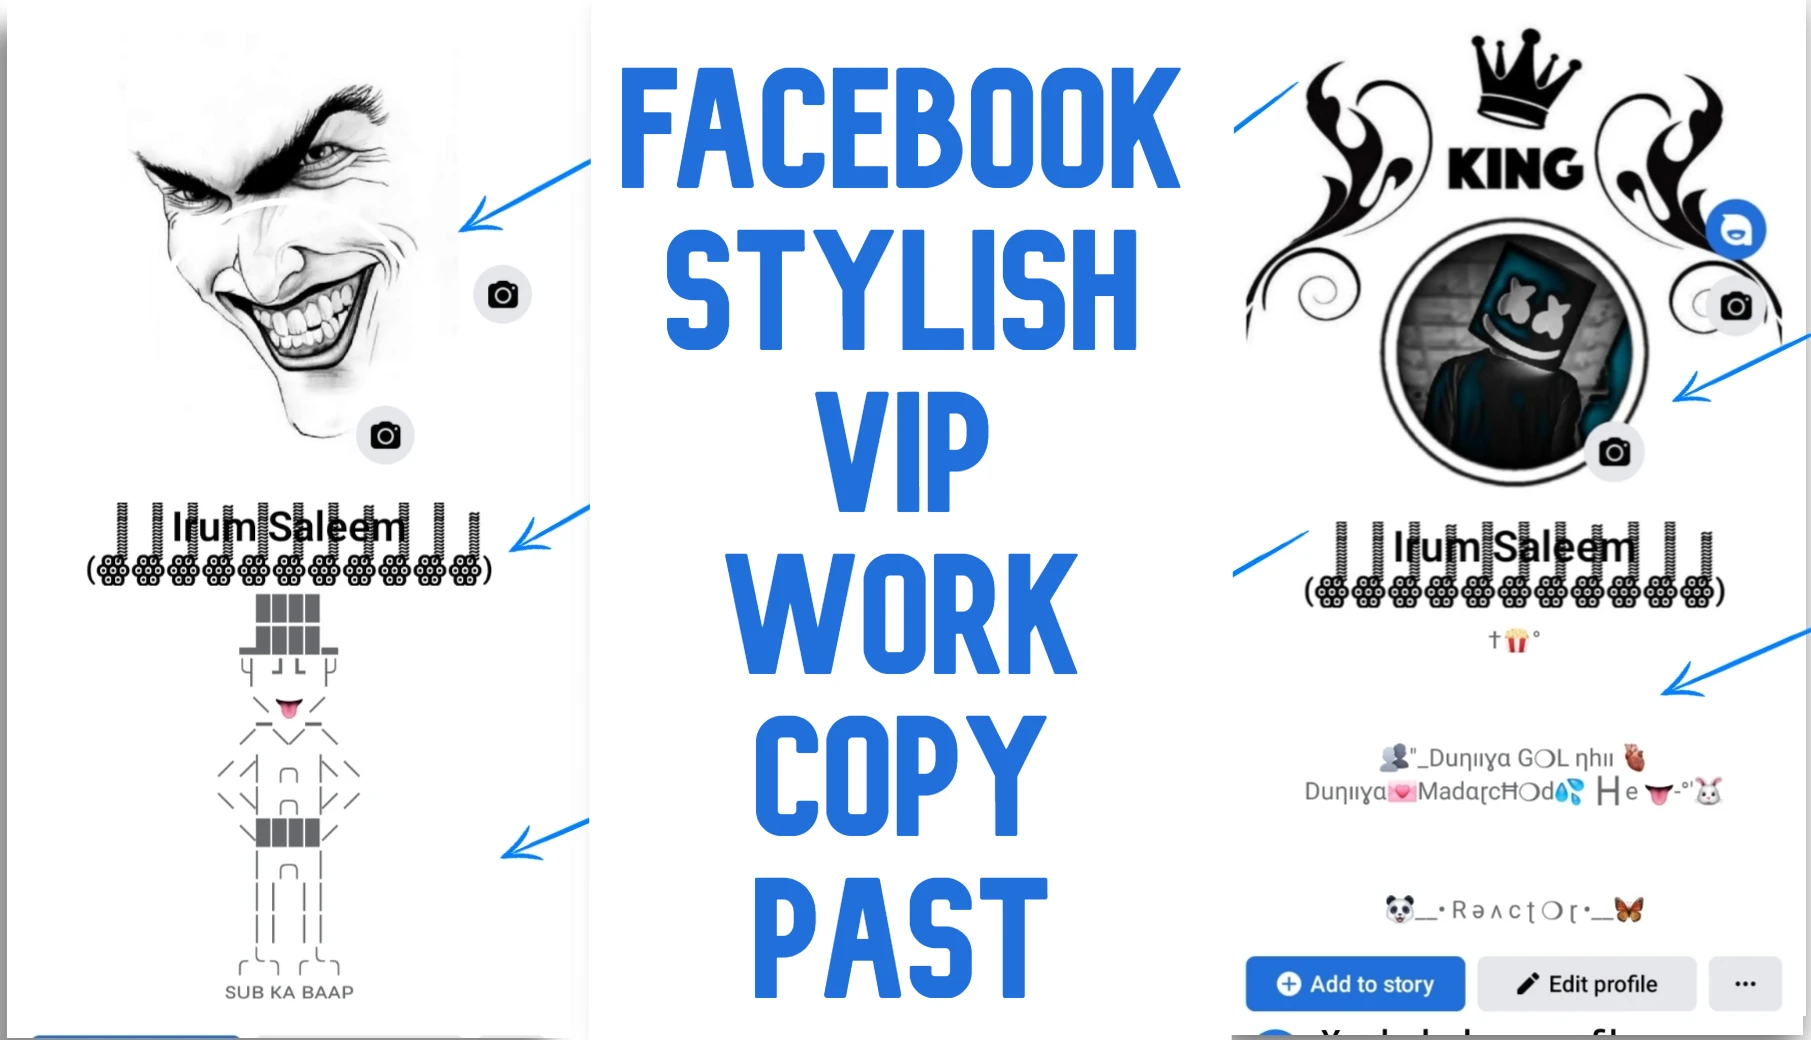 Facebook Stylish Vip Work Copy Past